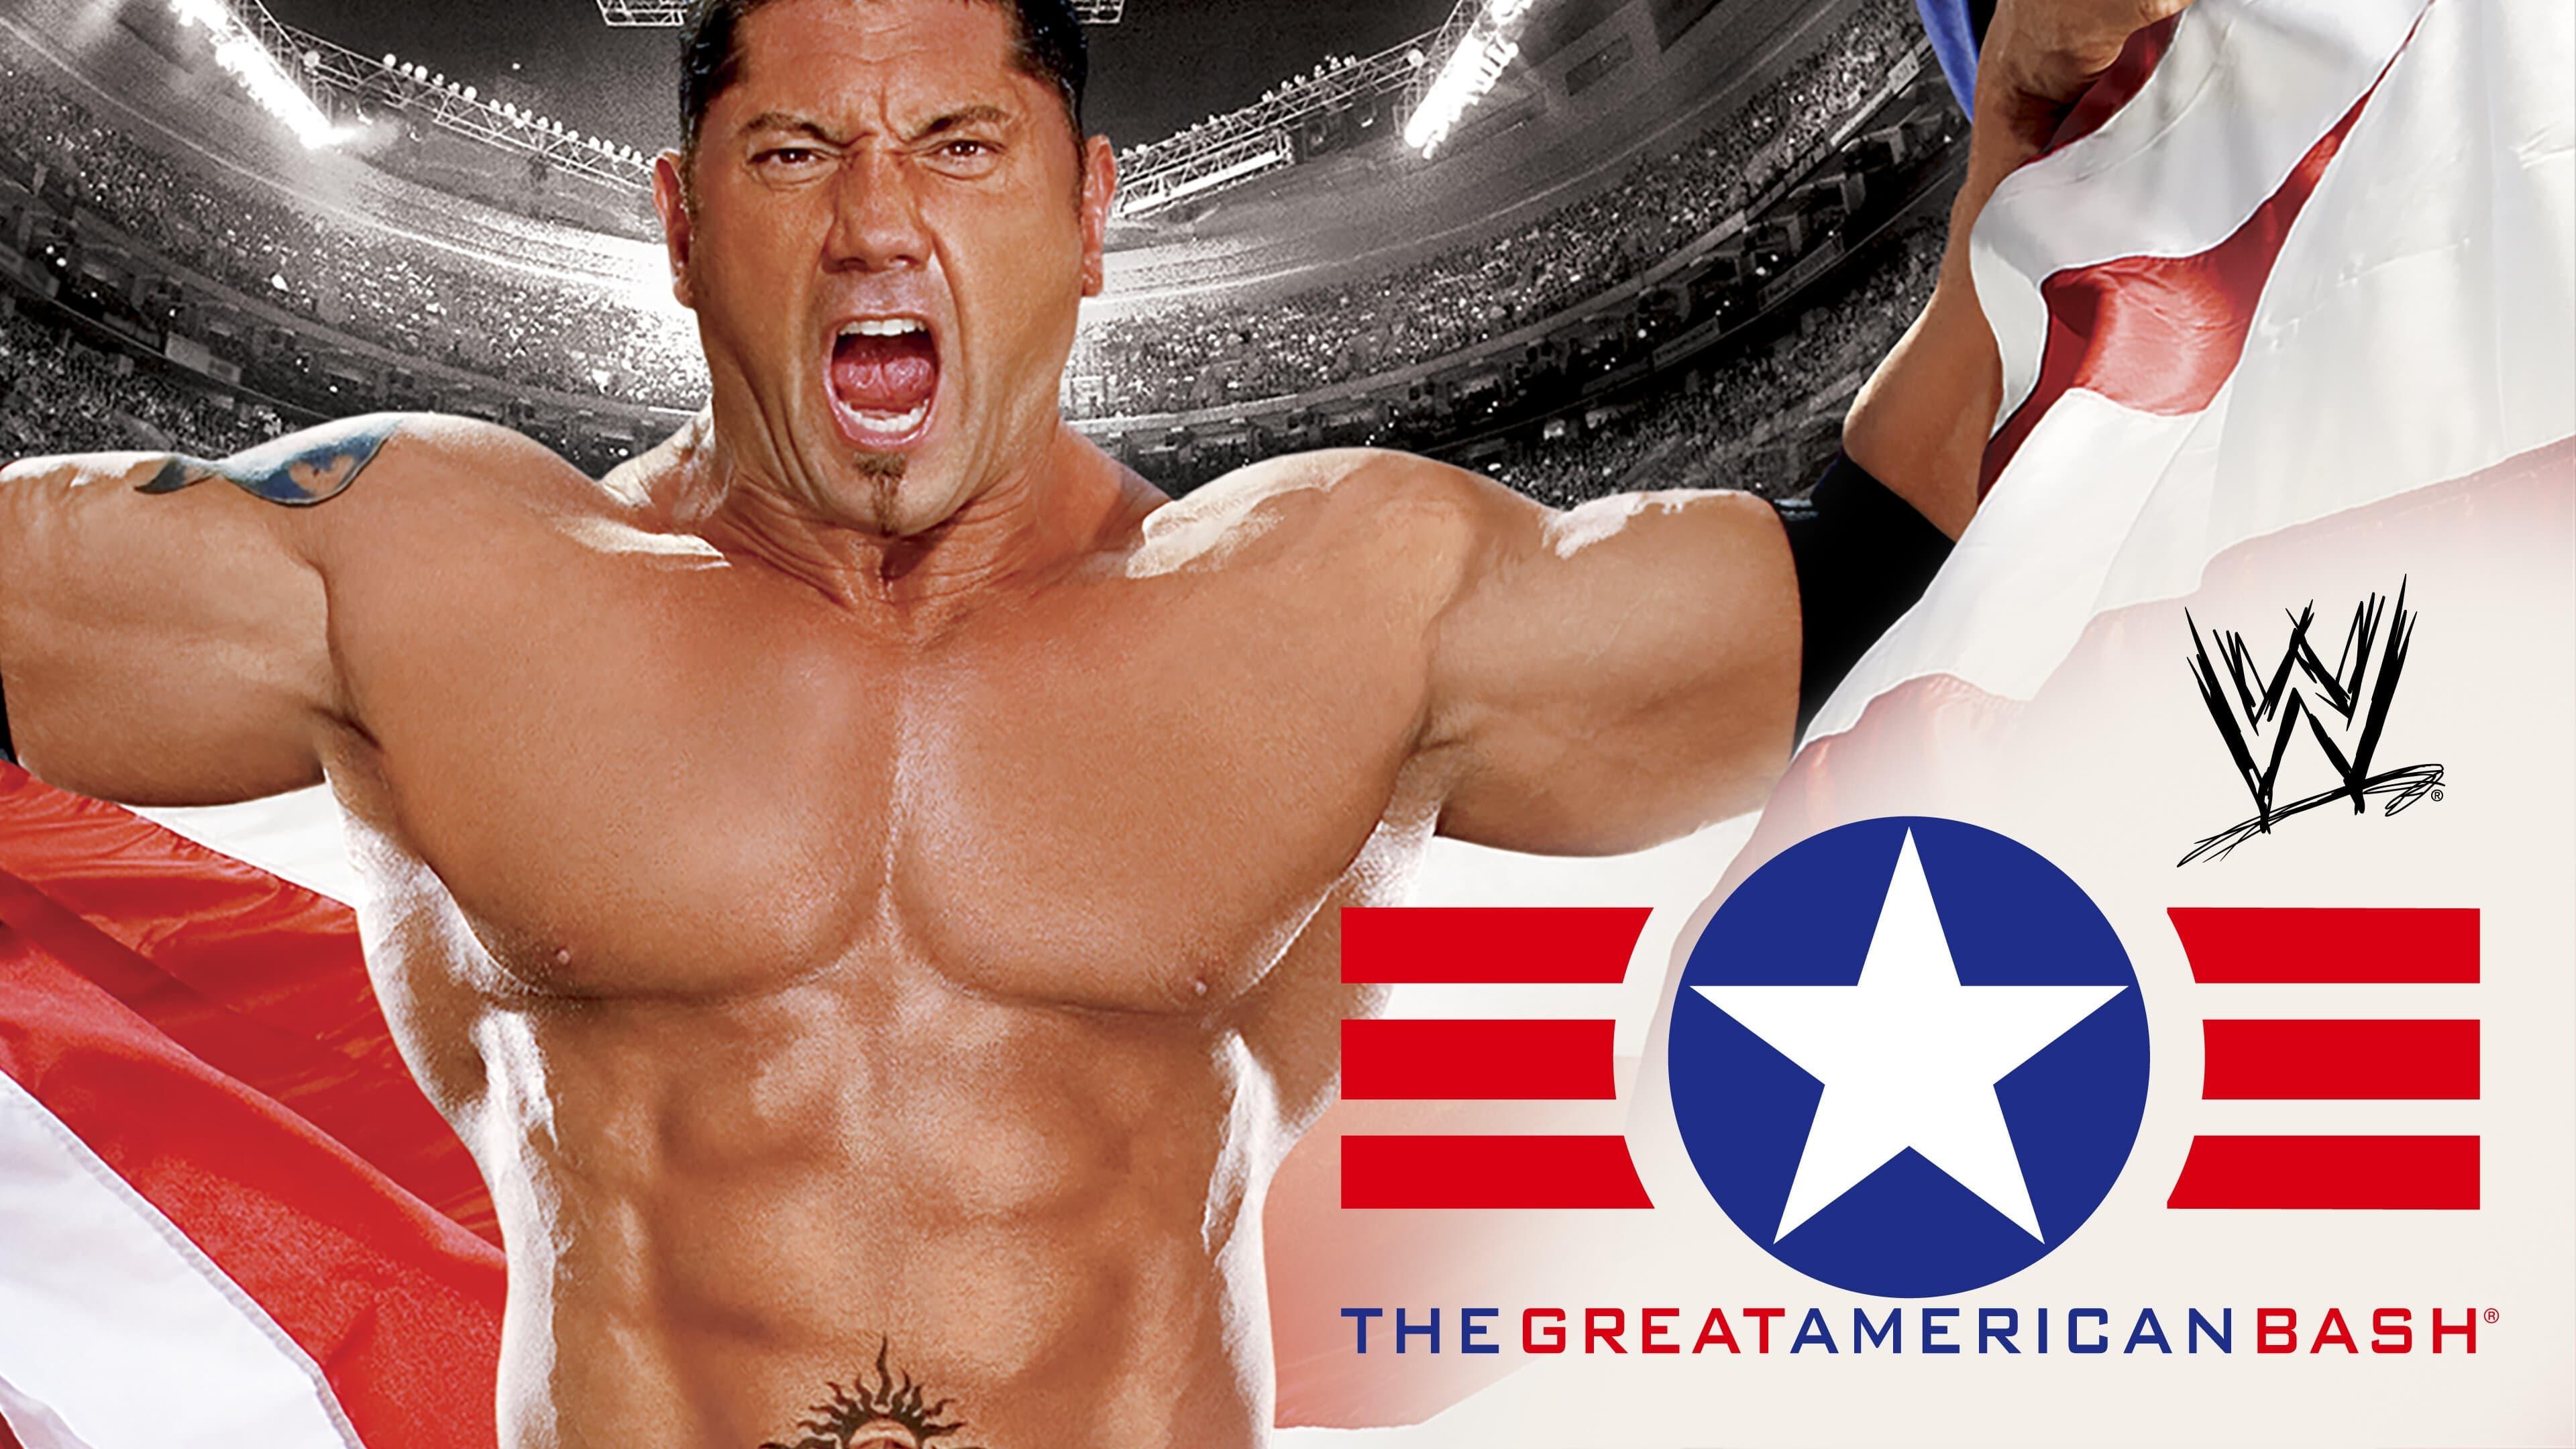 WWE The Great American Bash 2006 backdrop